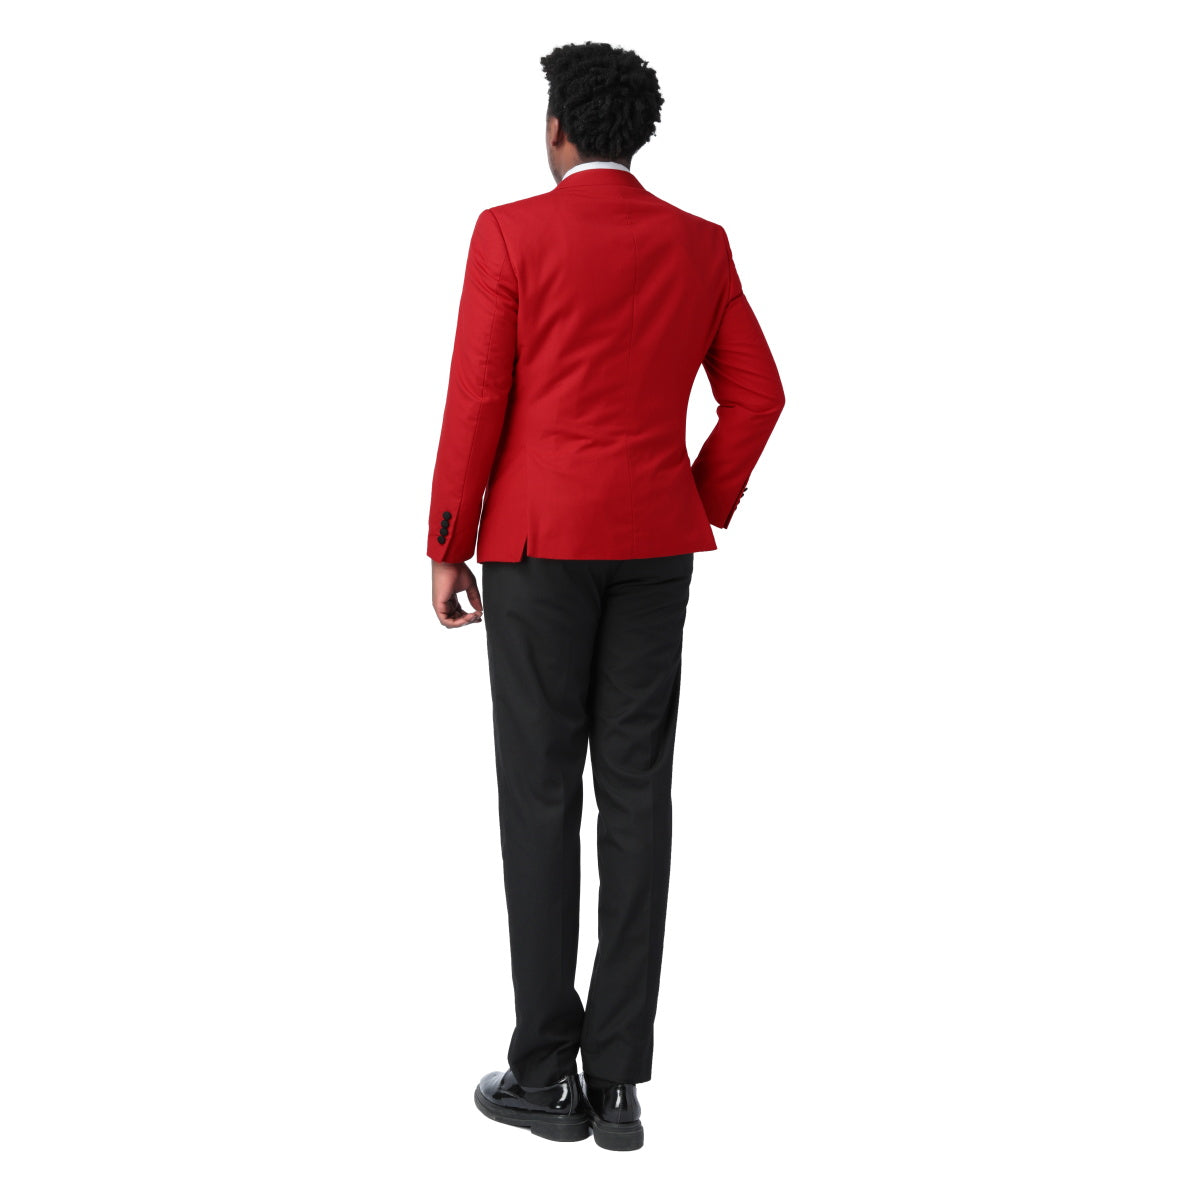 3 Piece Men's Suits One Button Slim Fit Peaked Lapel Tuxedo Red